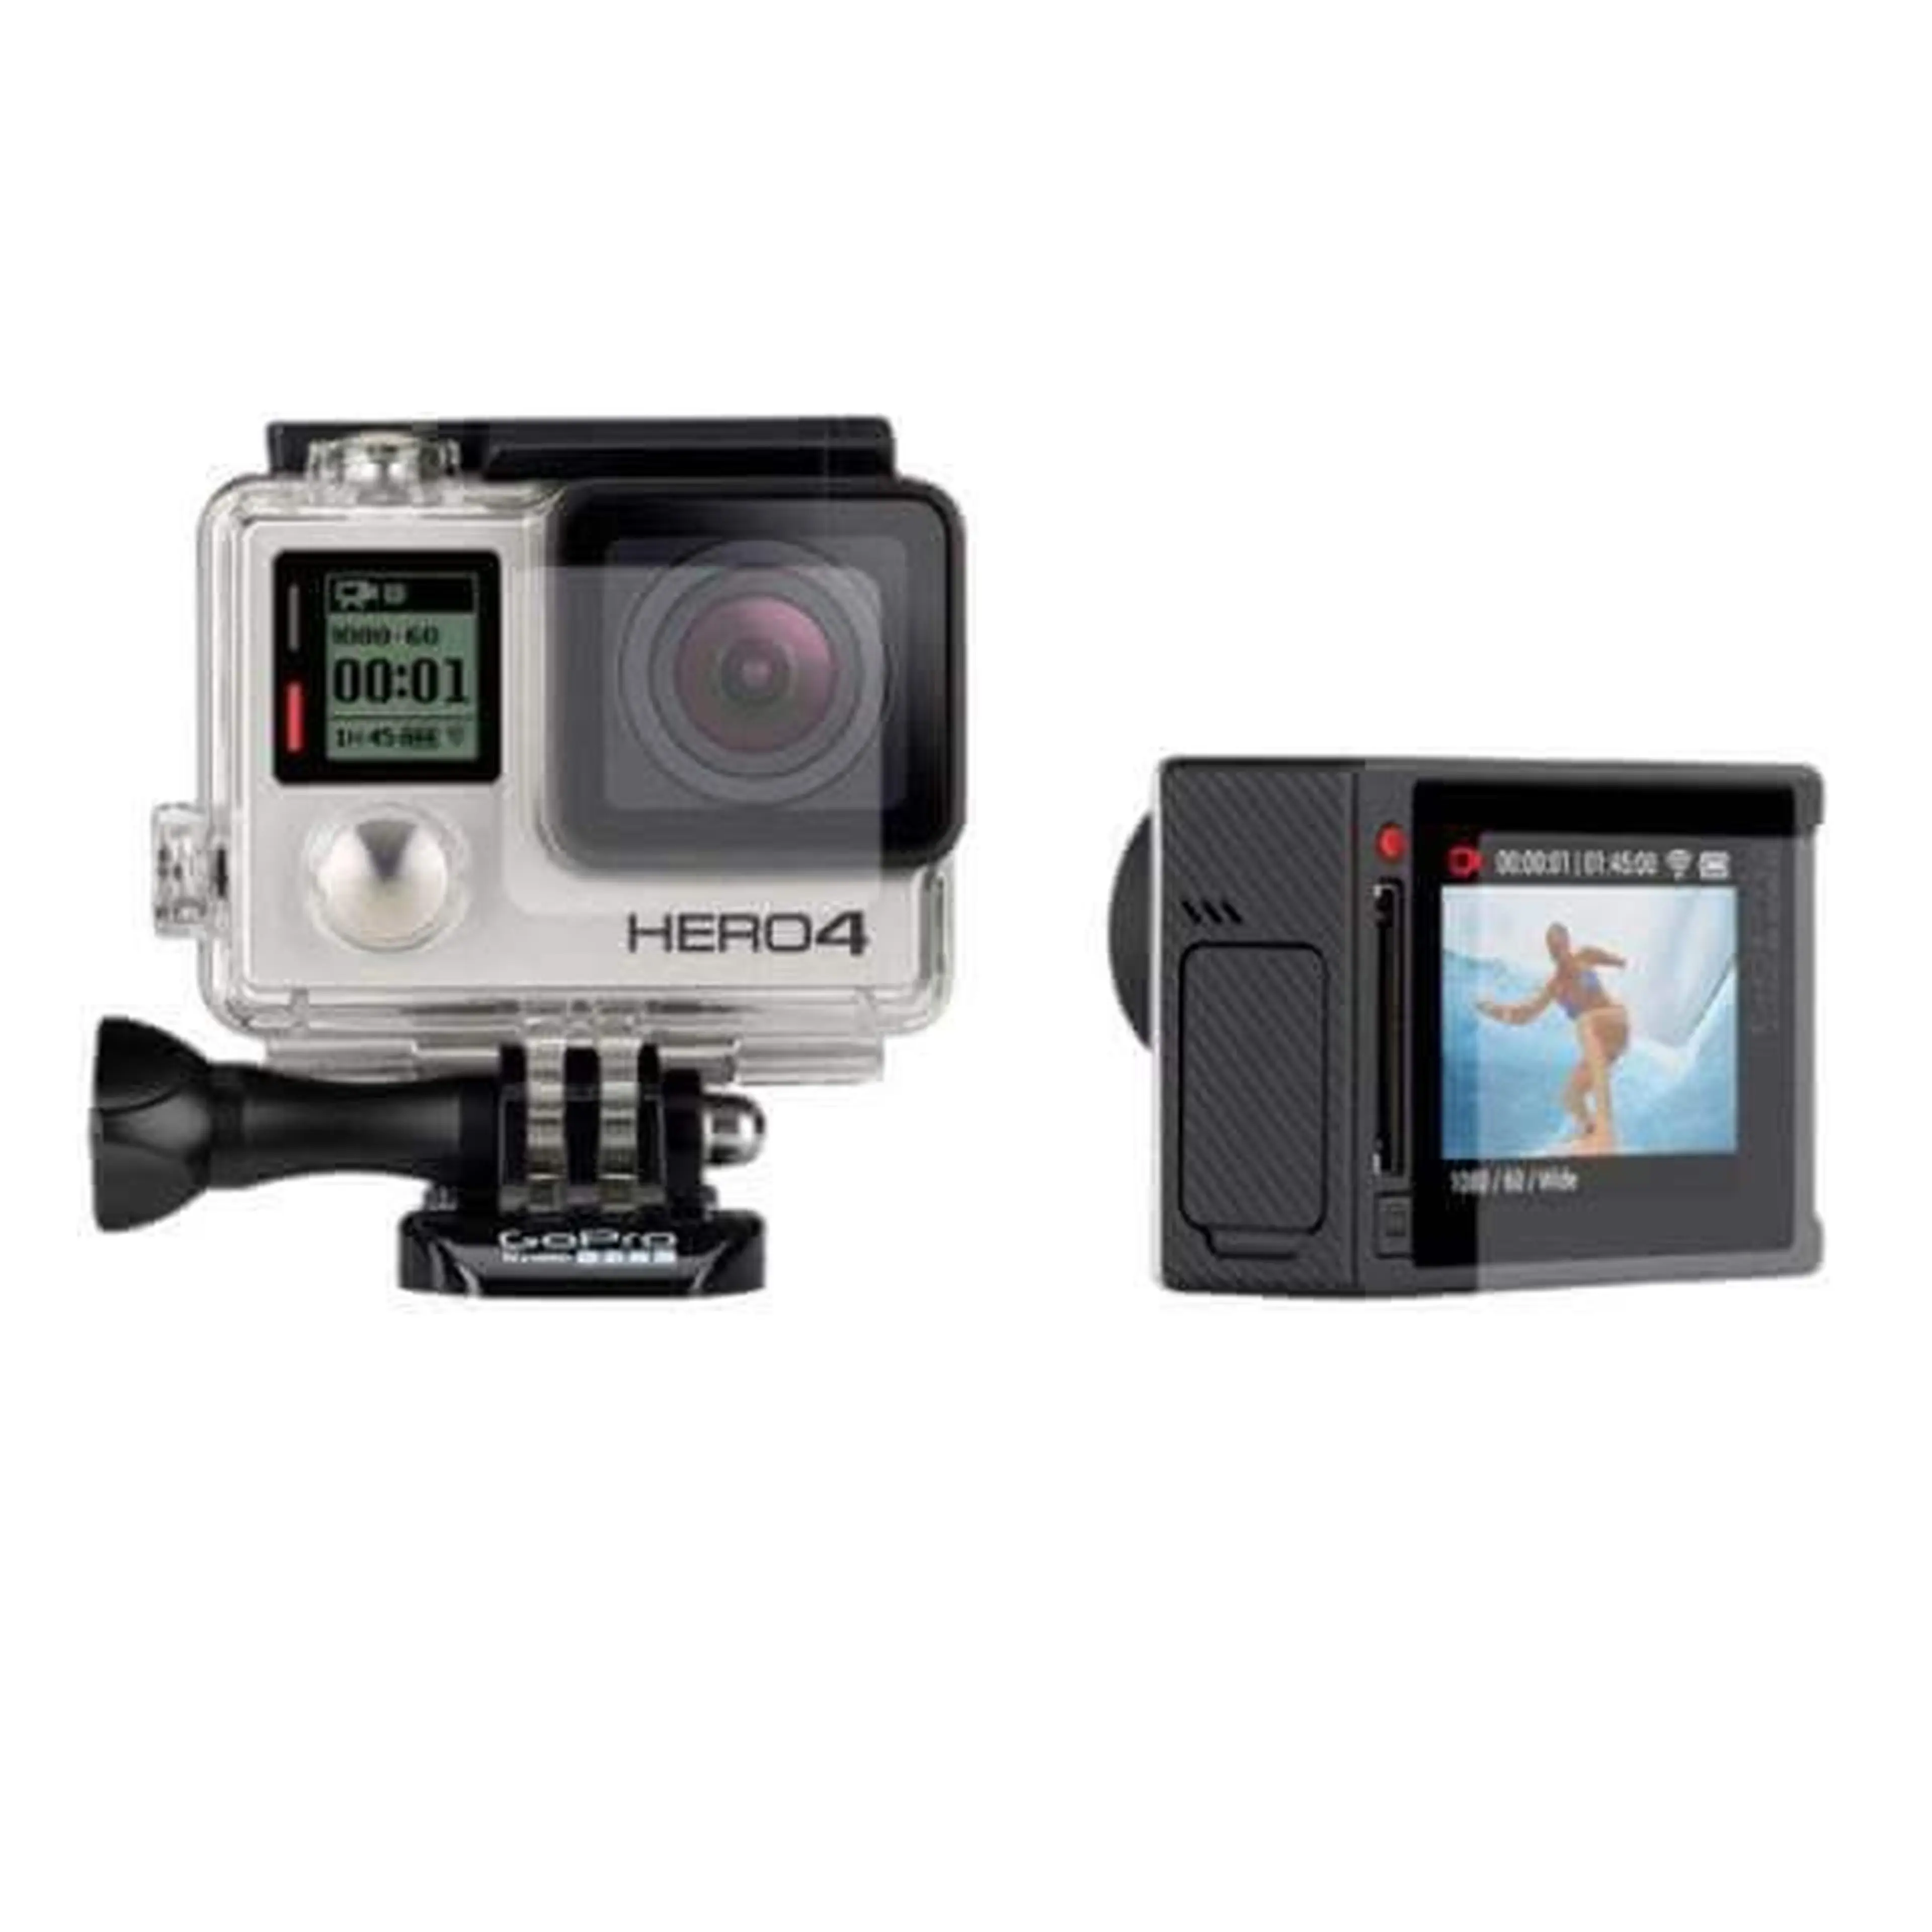 1. Folie protectie ecran + lentila camera video foto GoPro Hero 4